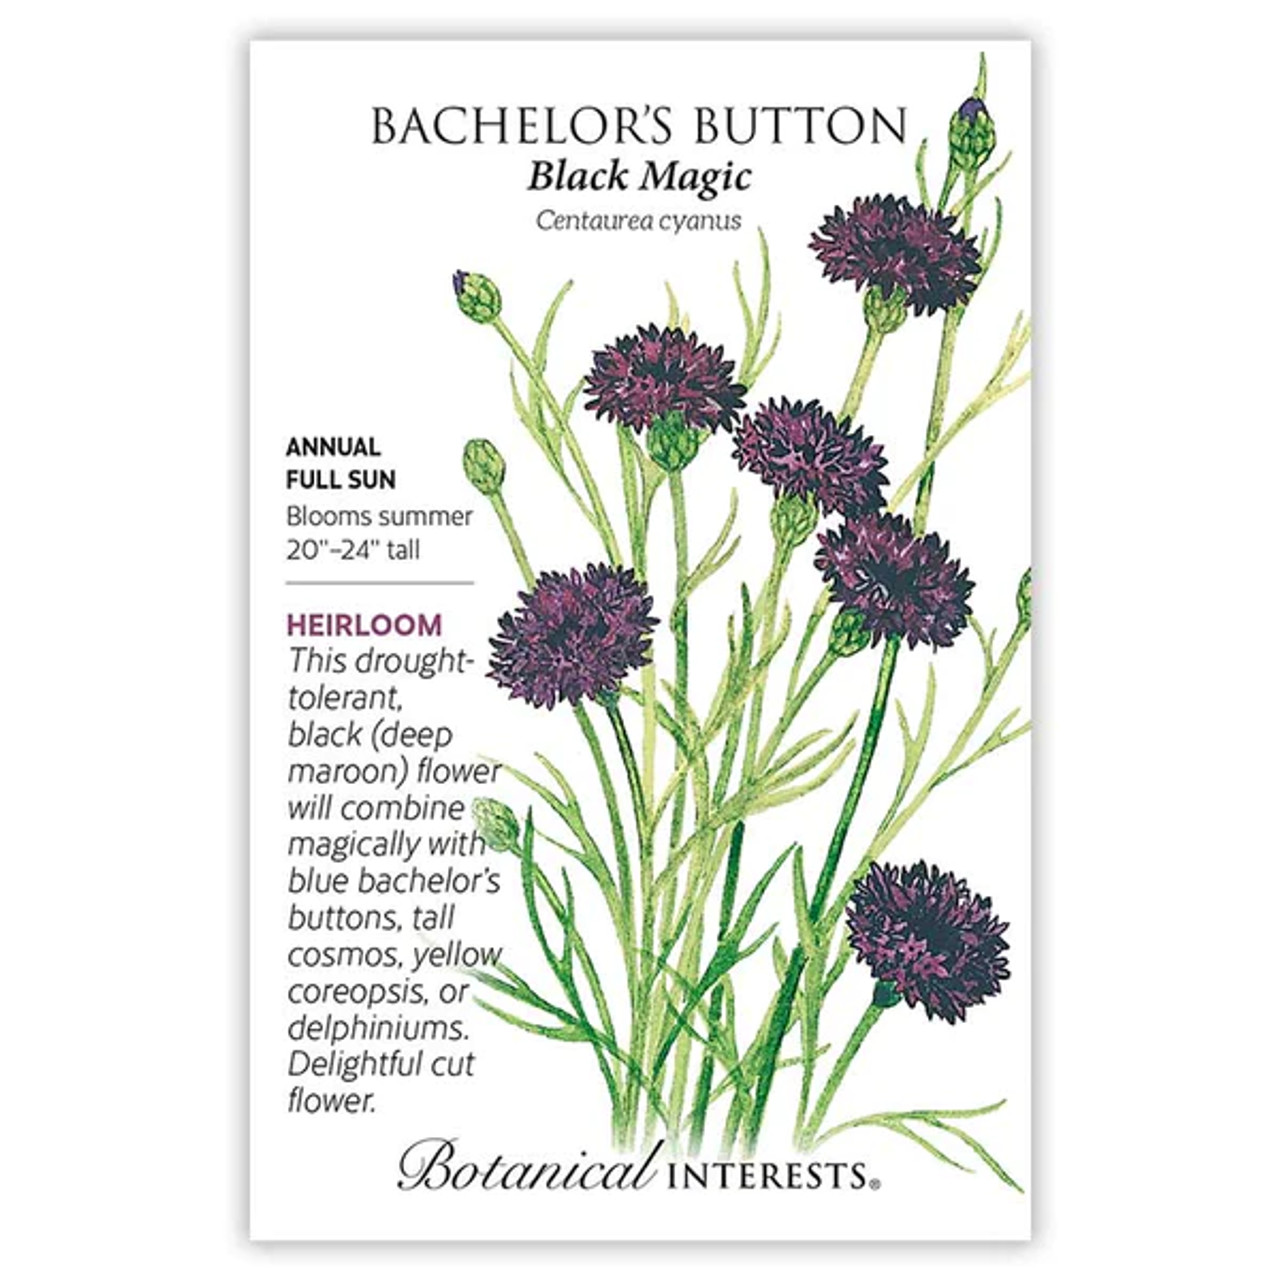 Botanical Interests - Black Magic Bachelor's Button - NYBG Shop